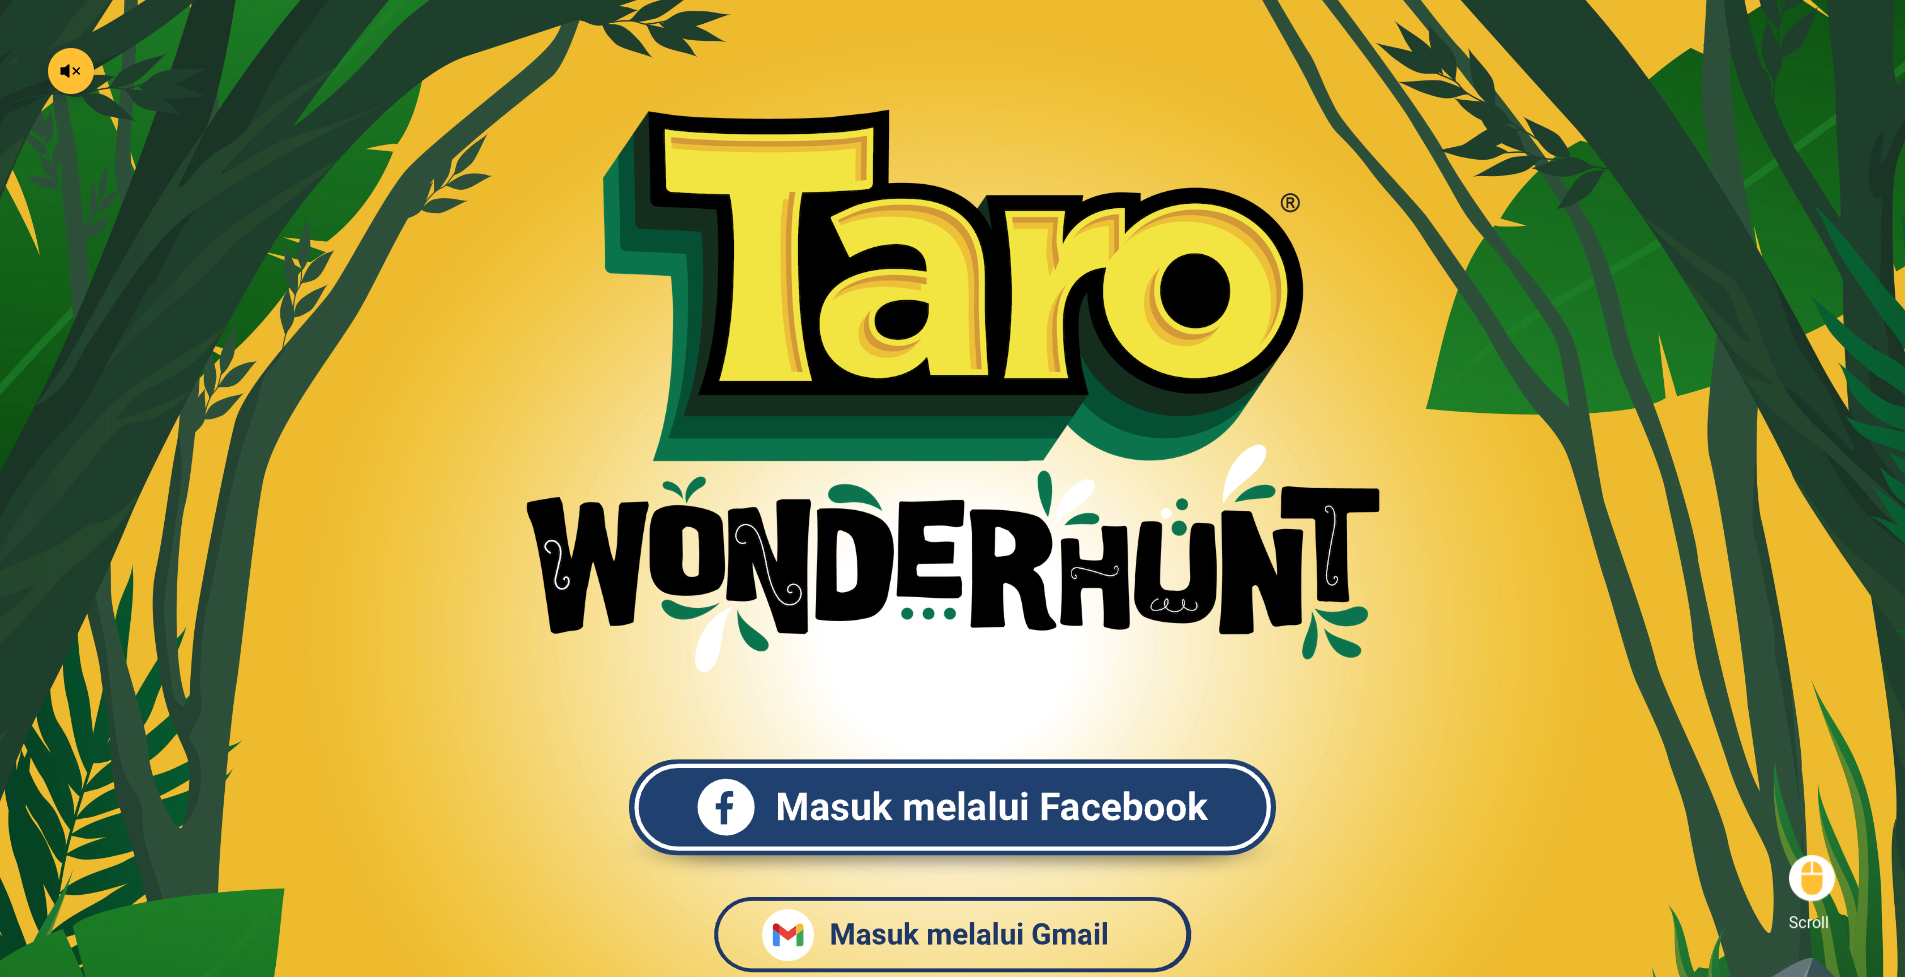 Taro Wonderhunt